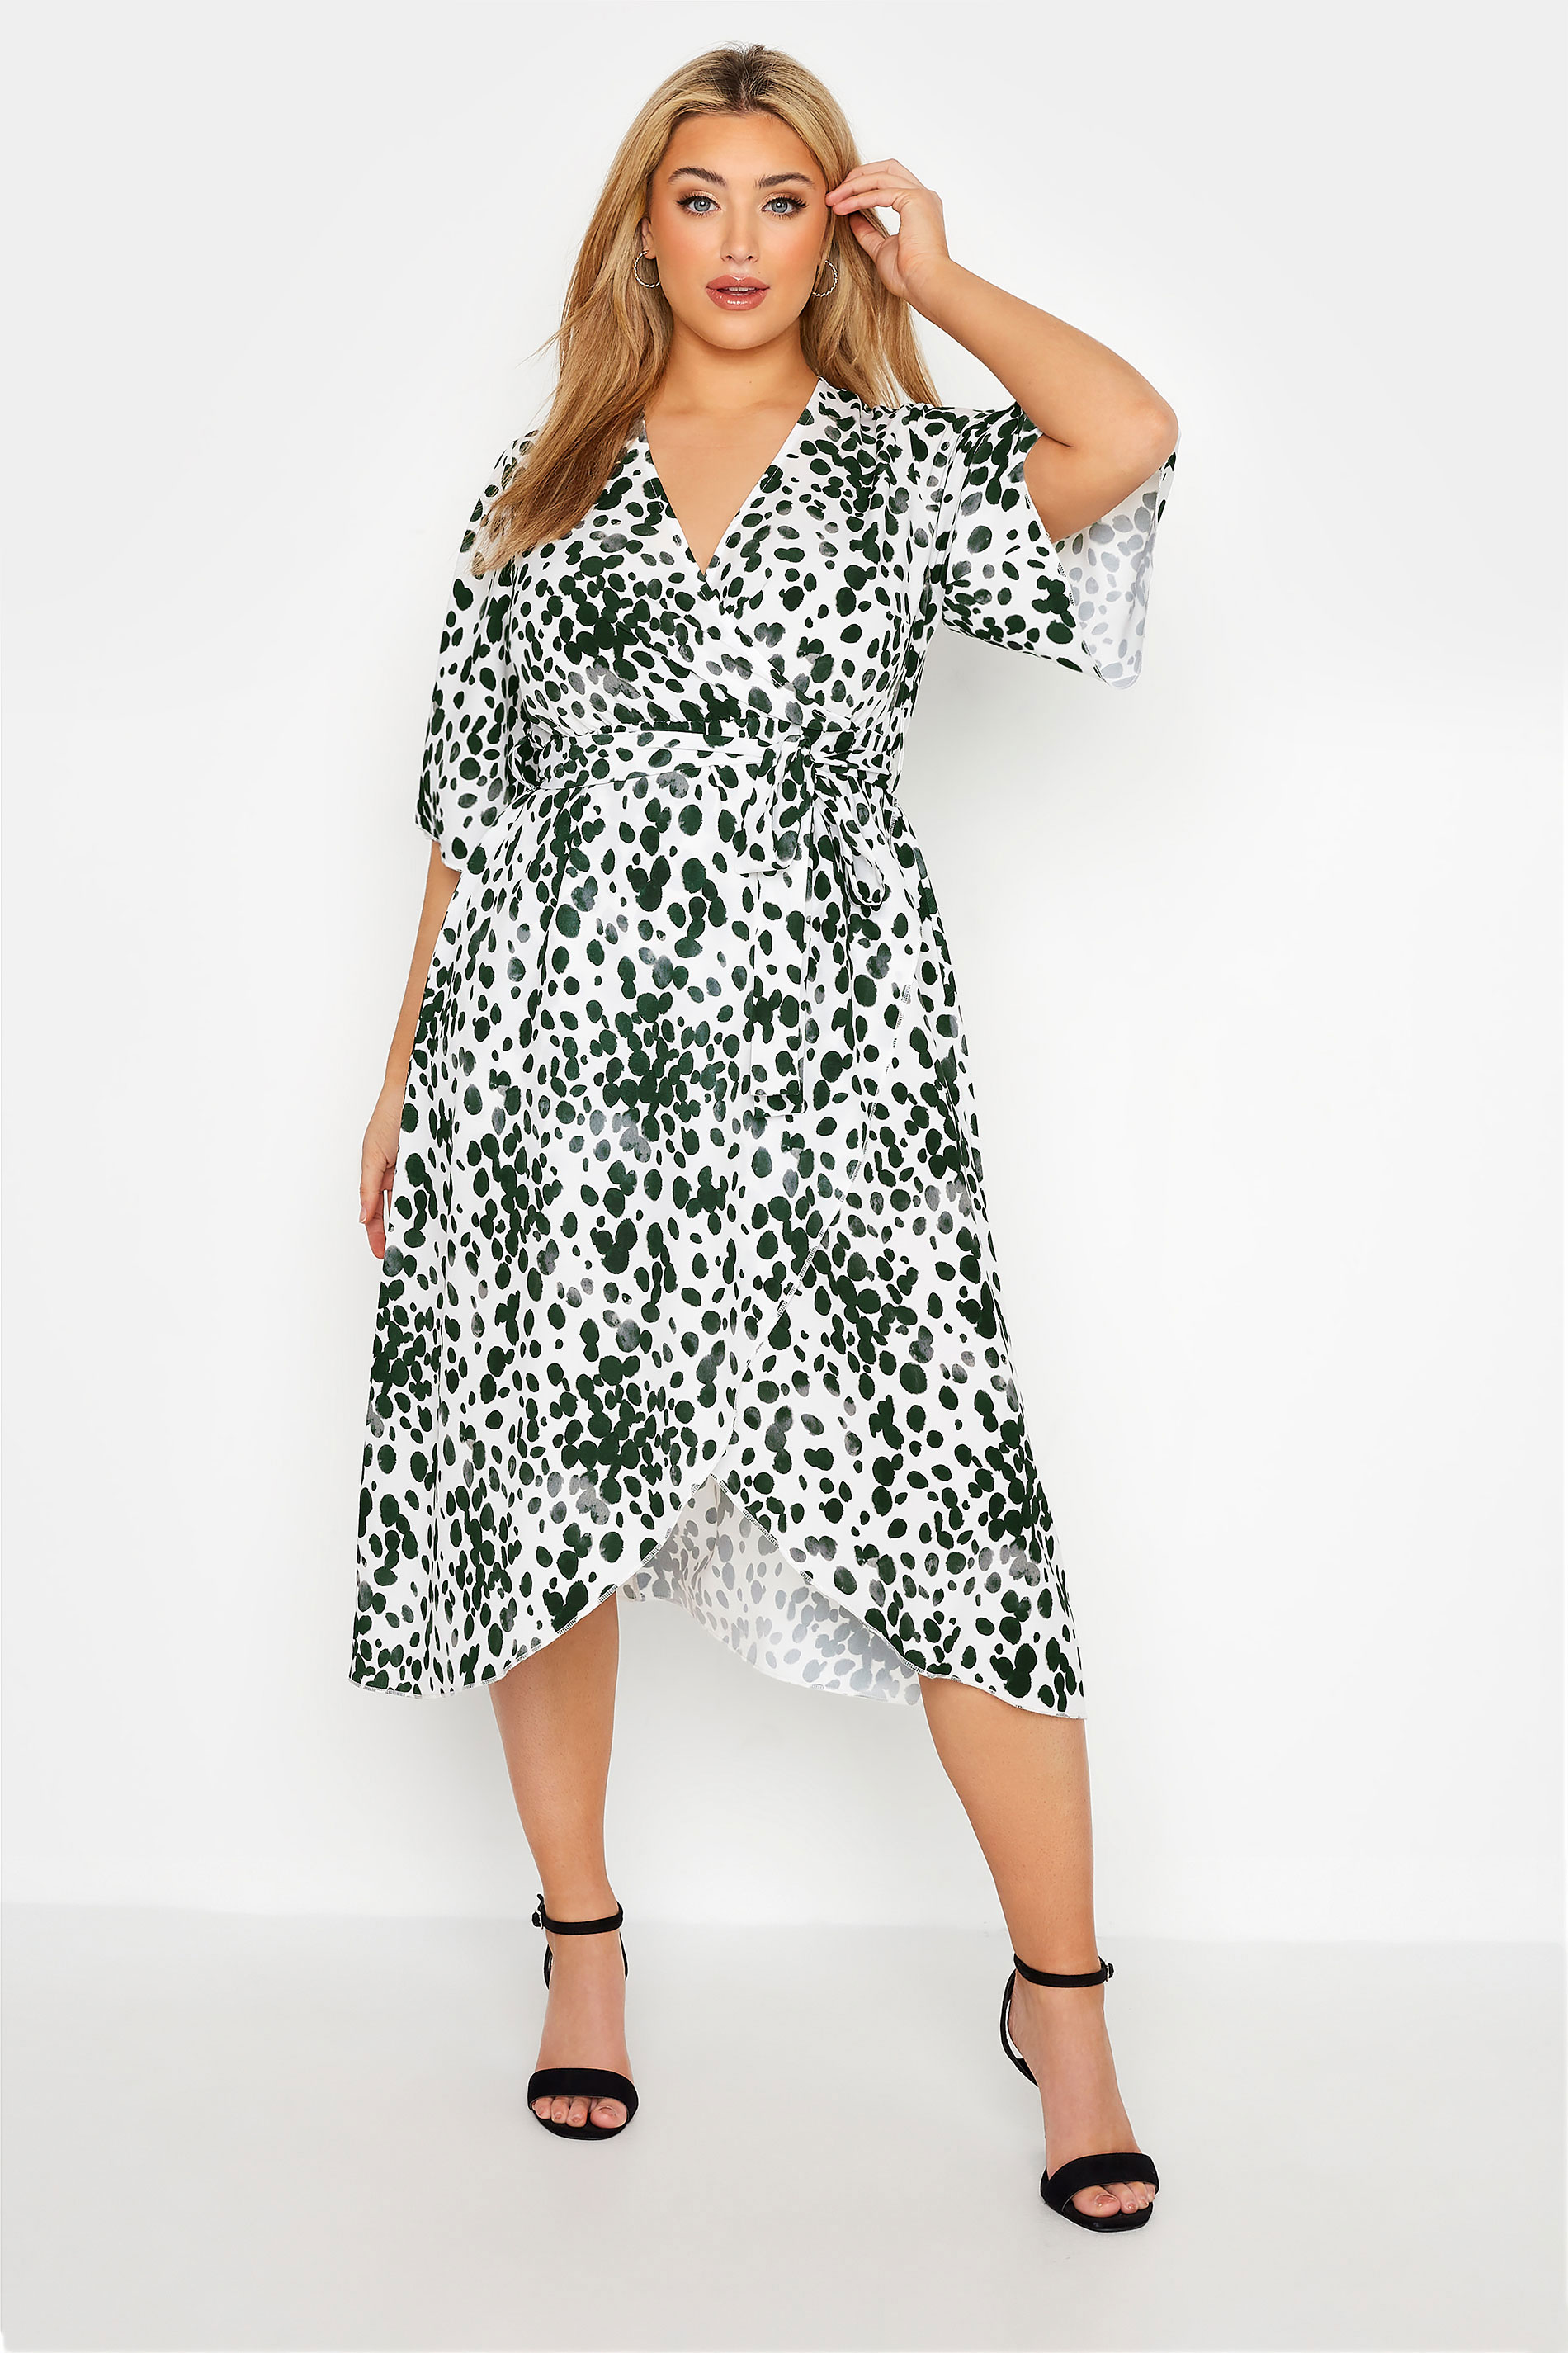 YOURS LONDON Plus Size White Dalmatian Print Wrap Dress | Yours Clothing 2